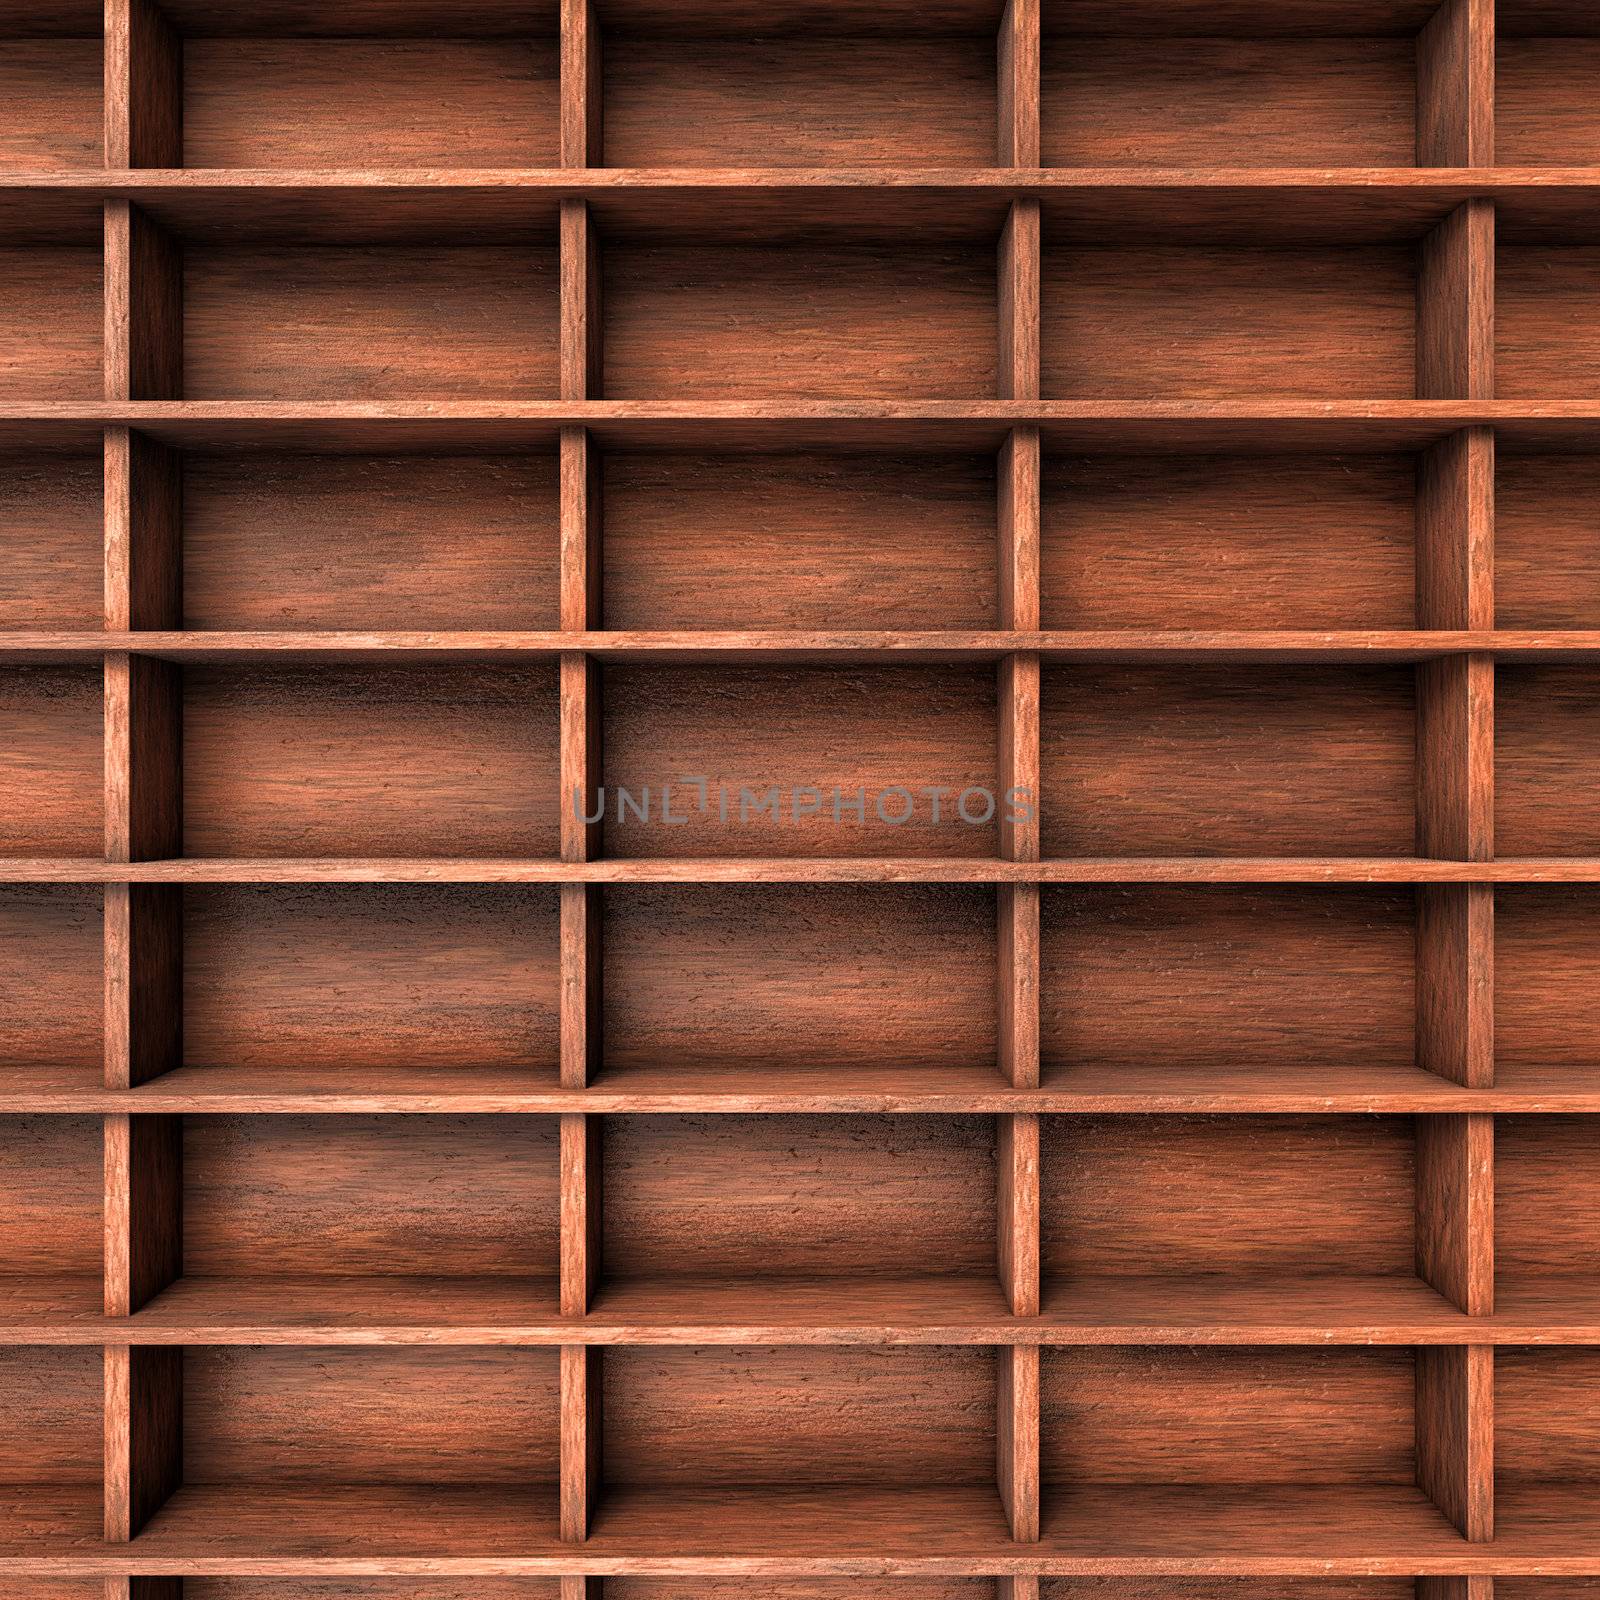 Wood shelves slots by dynamicfoto